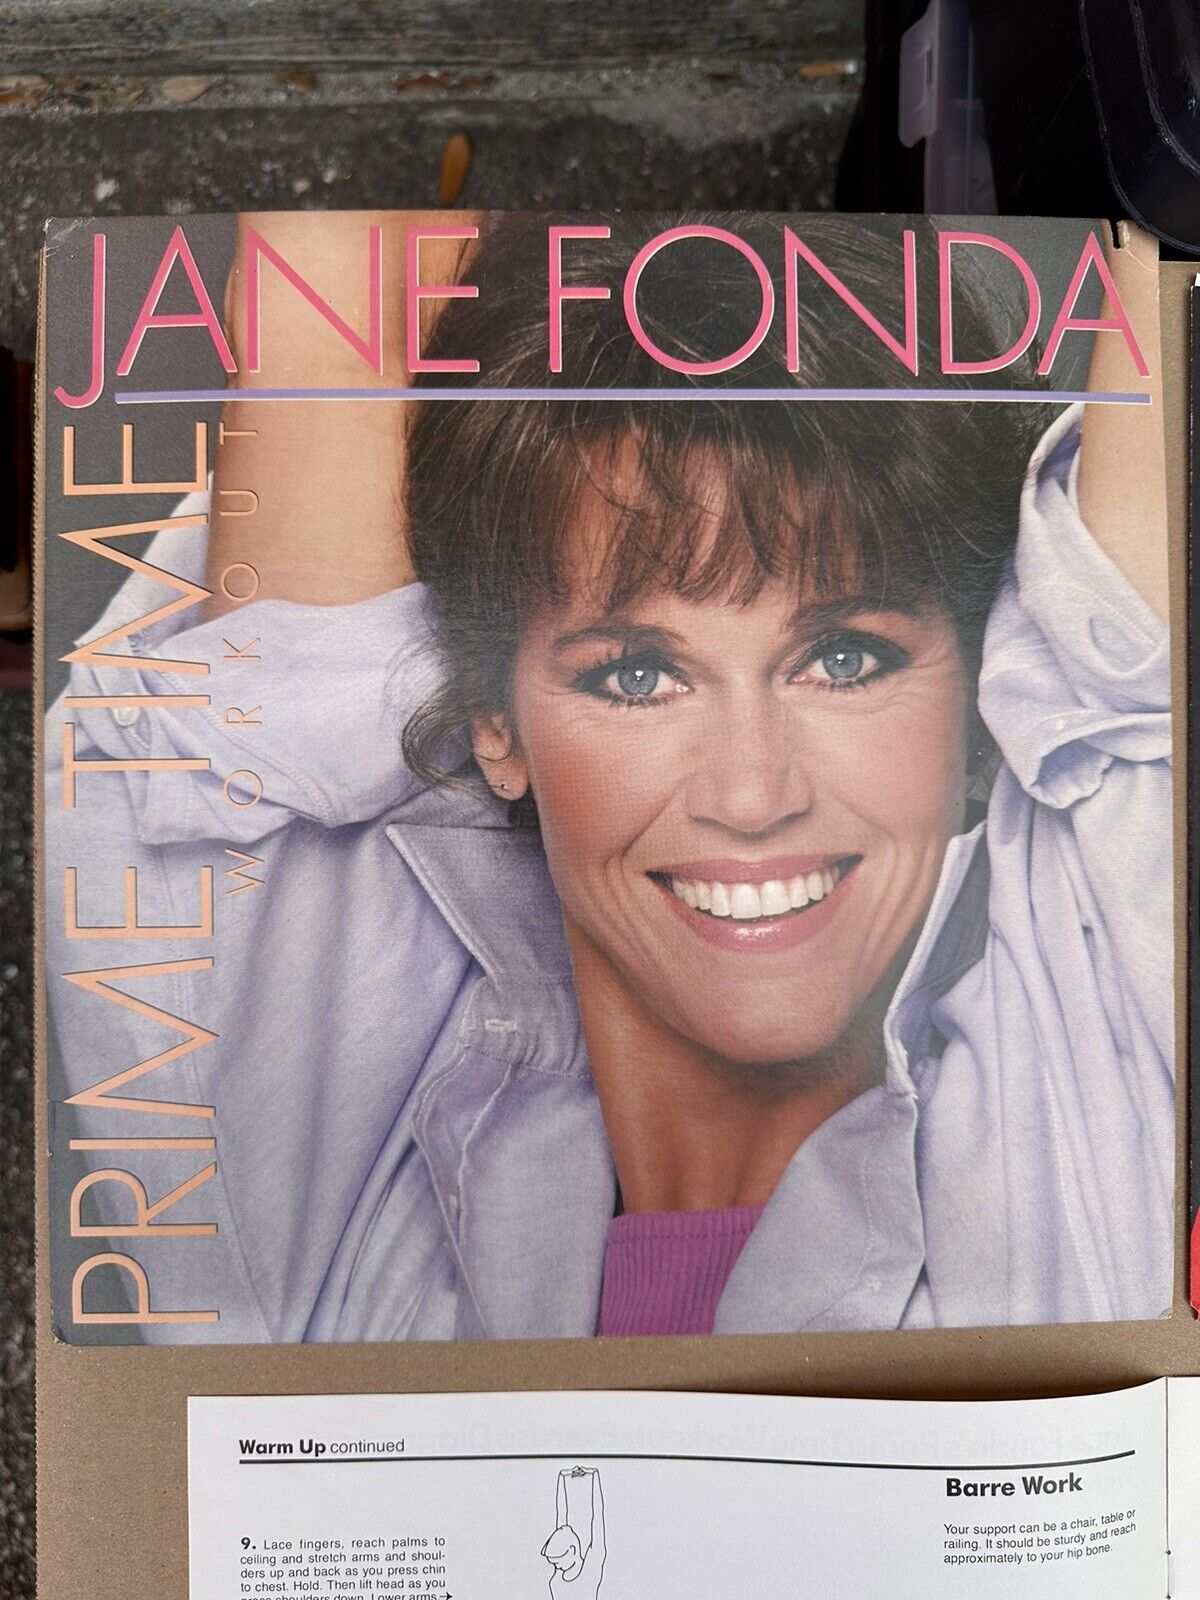 JANE FONDA - Prime Time Workout - Sealed Vinyl LP Record Album